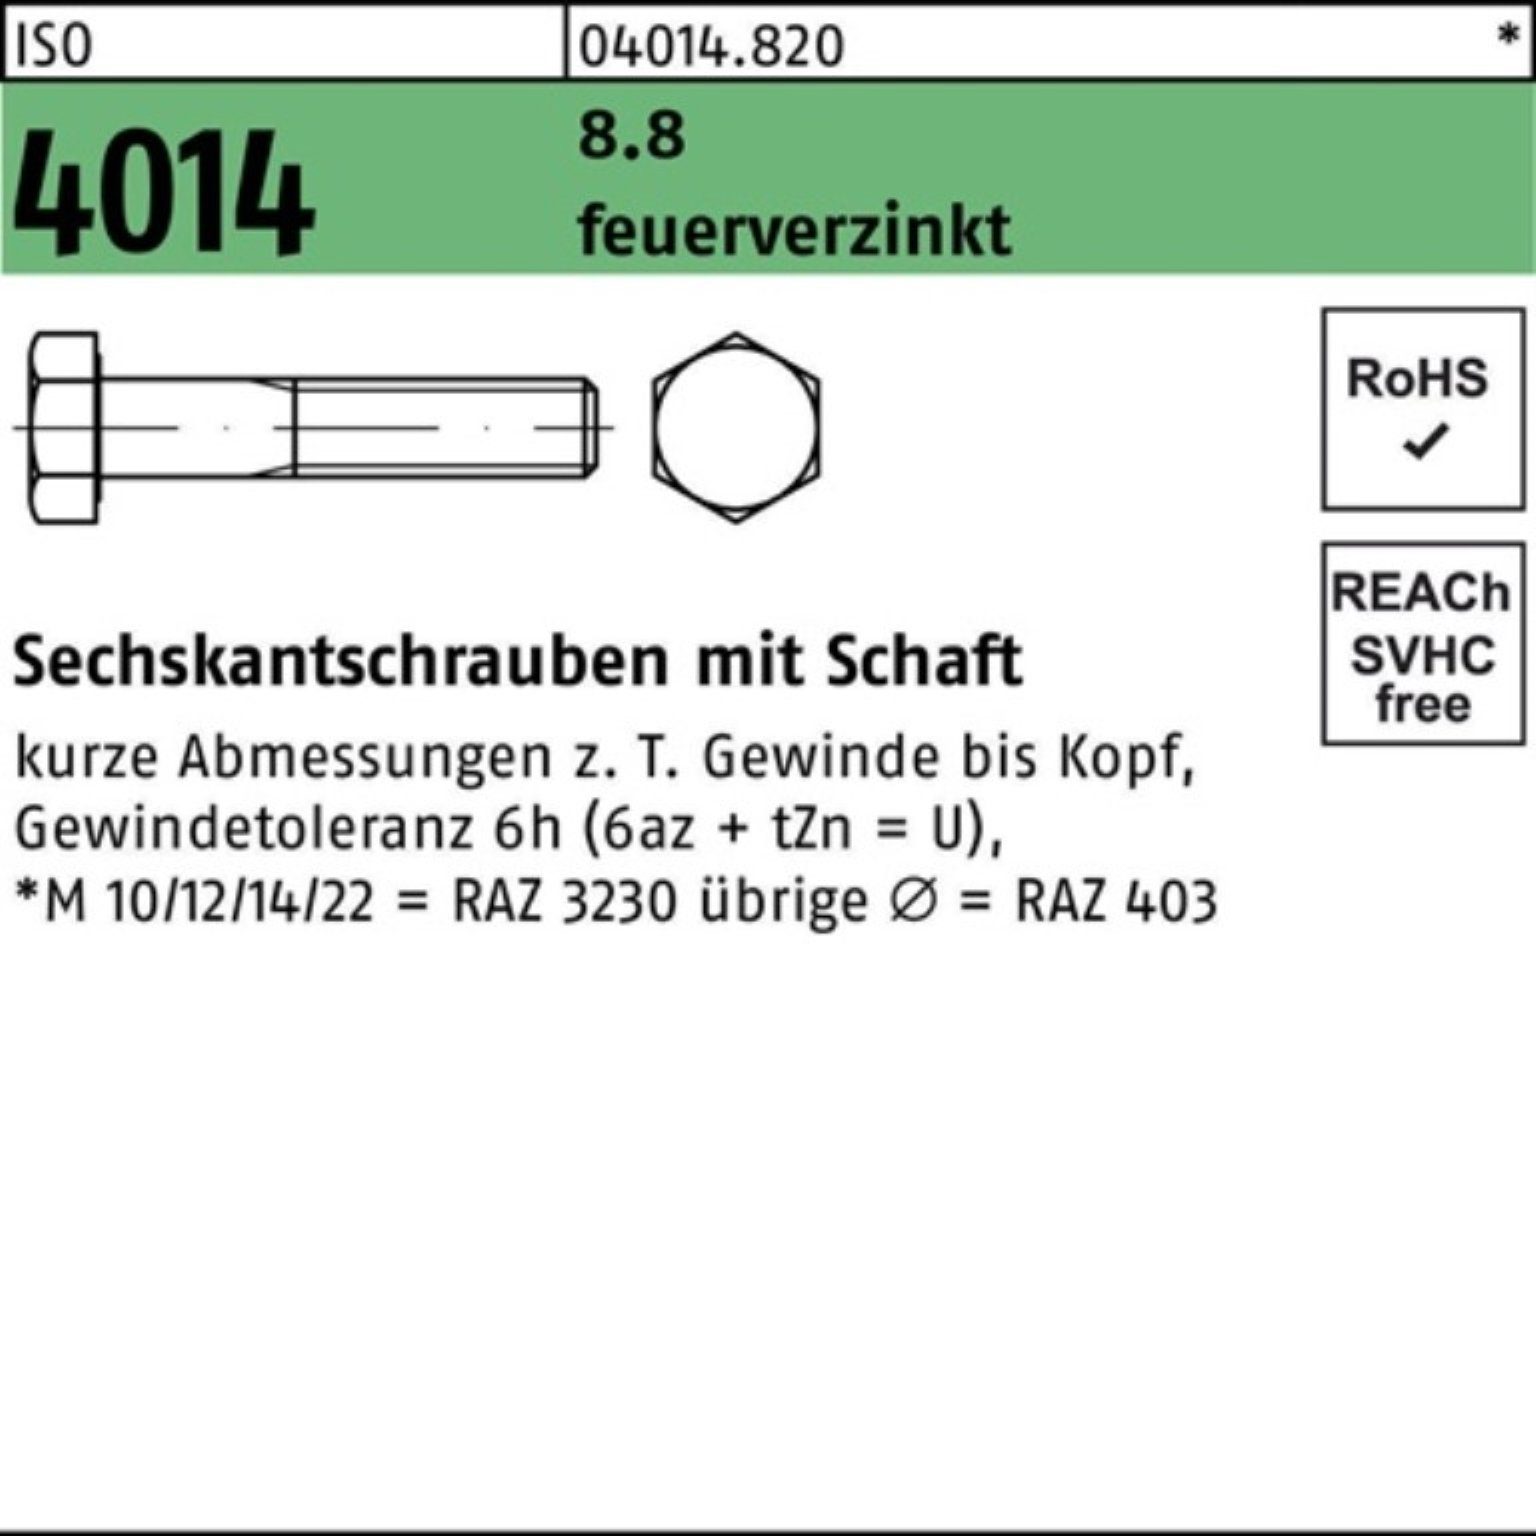 Bufab Sechskantschraube 100er Pack Sechskantschraube ISO 4014 Schaft M20x 240 8.8 feuerverz. 1 | Schrauben